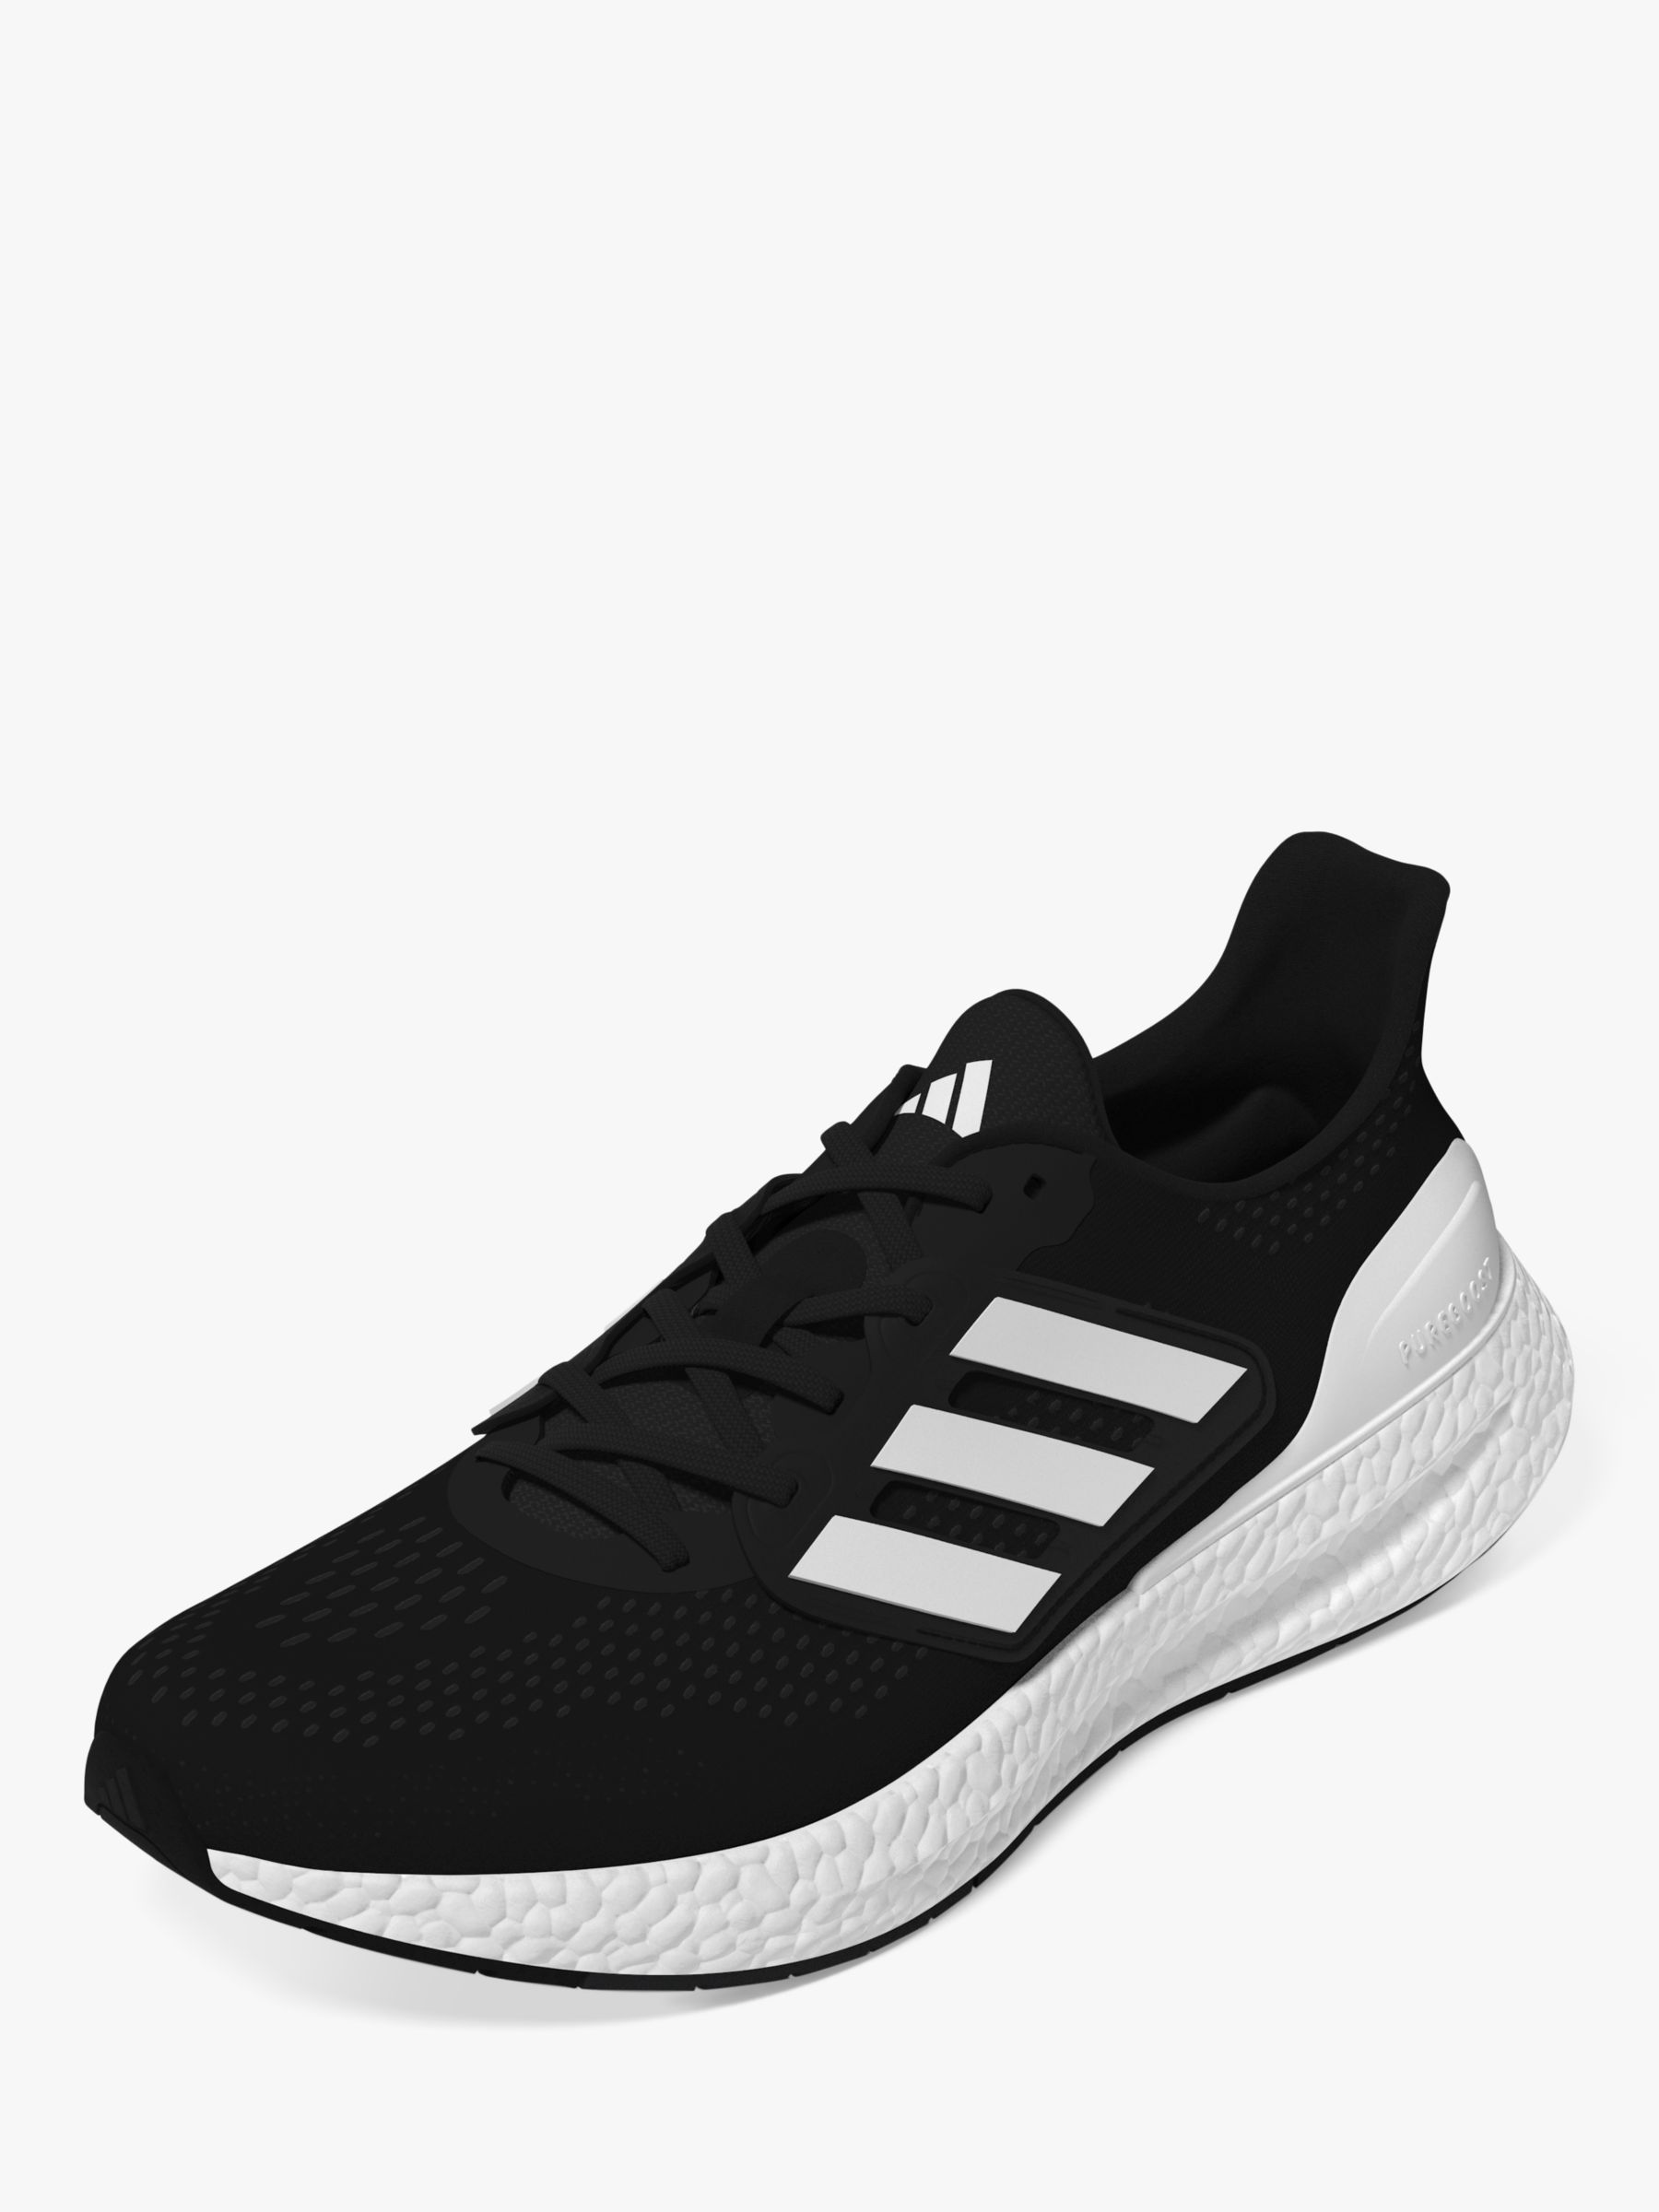 adidas Pureboost 23 Men's Running Shoes, Black/White/Carbon, 7